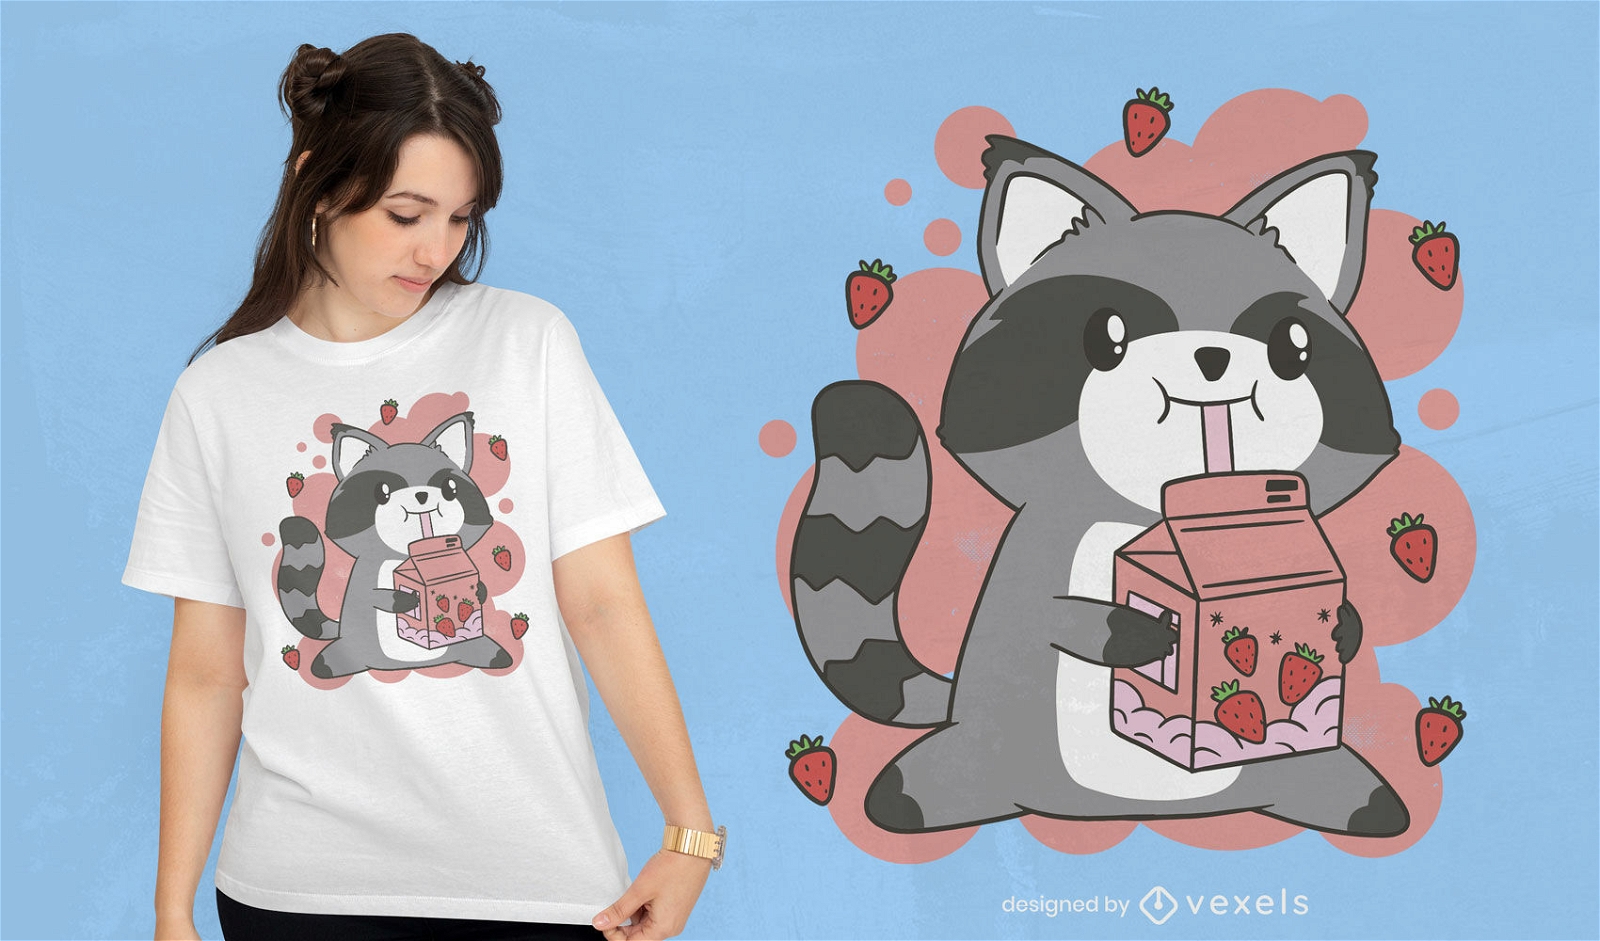 Raccoon drinking strawberry milk t-shirt design